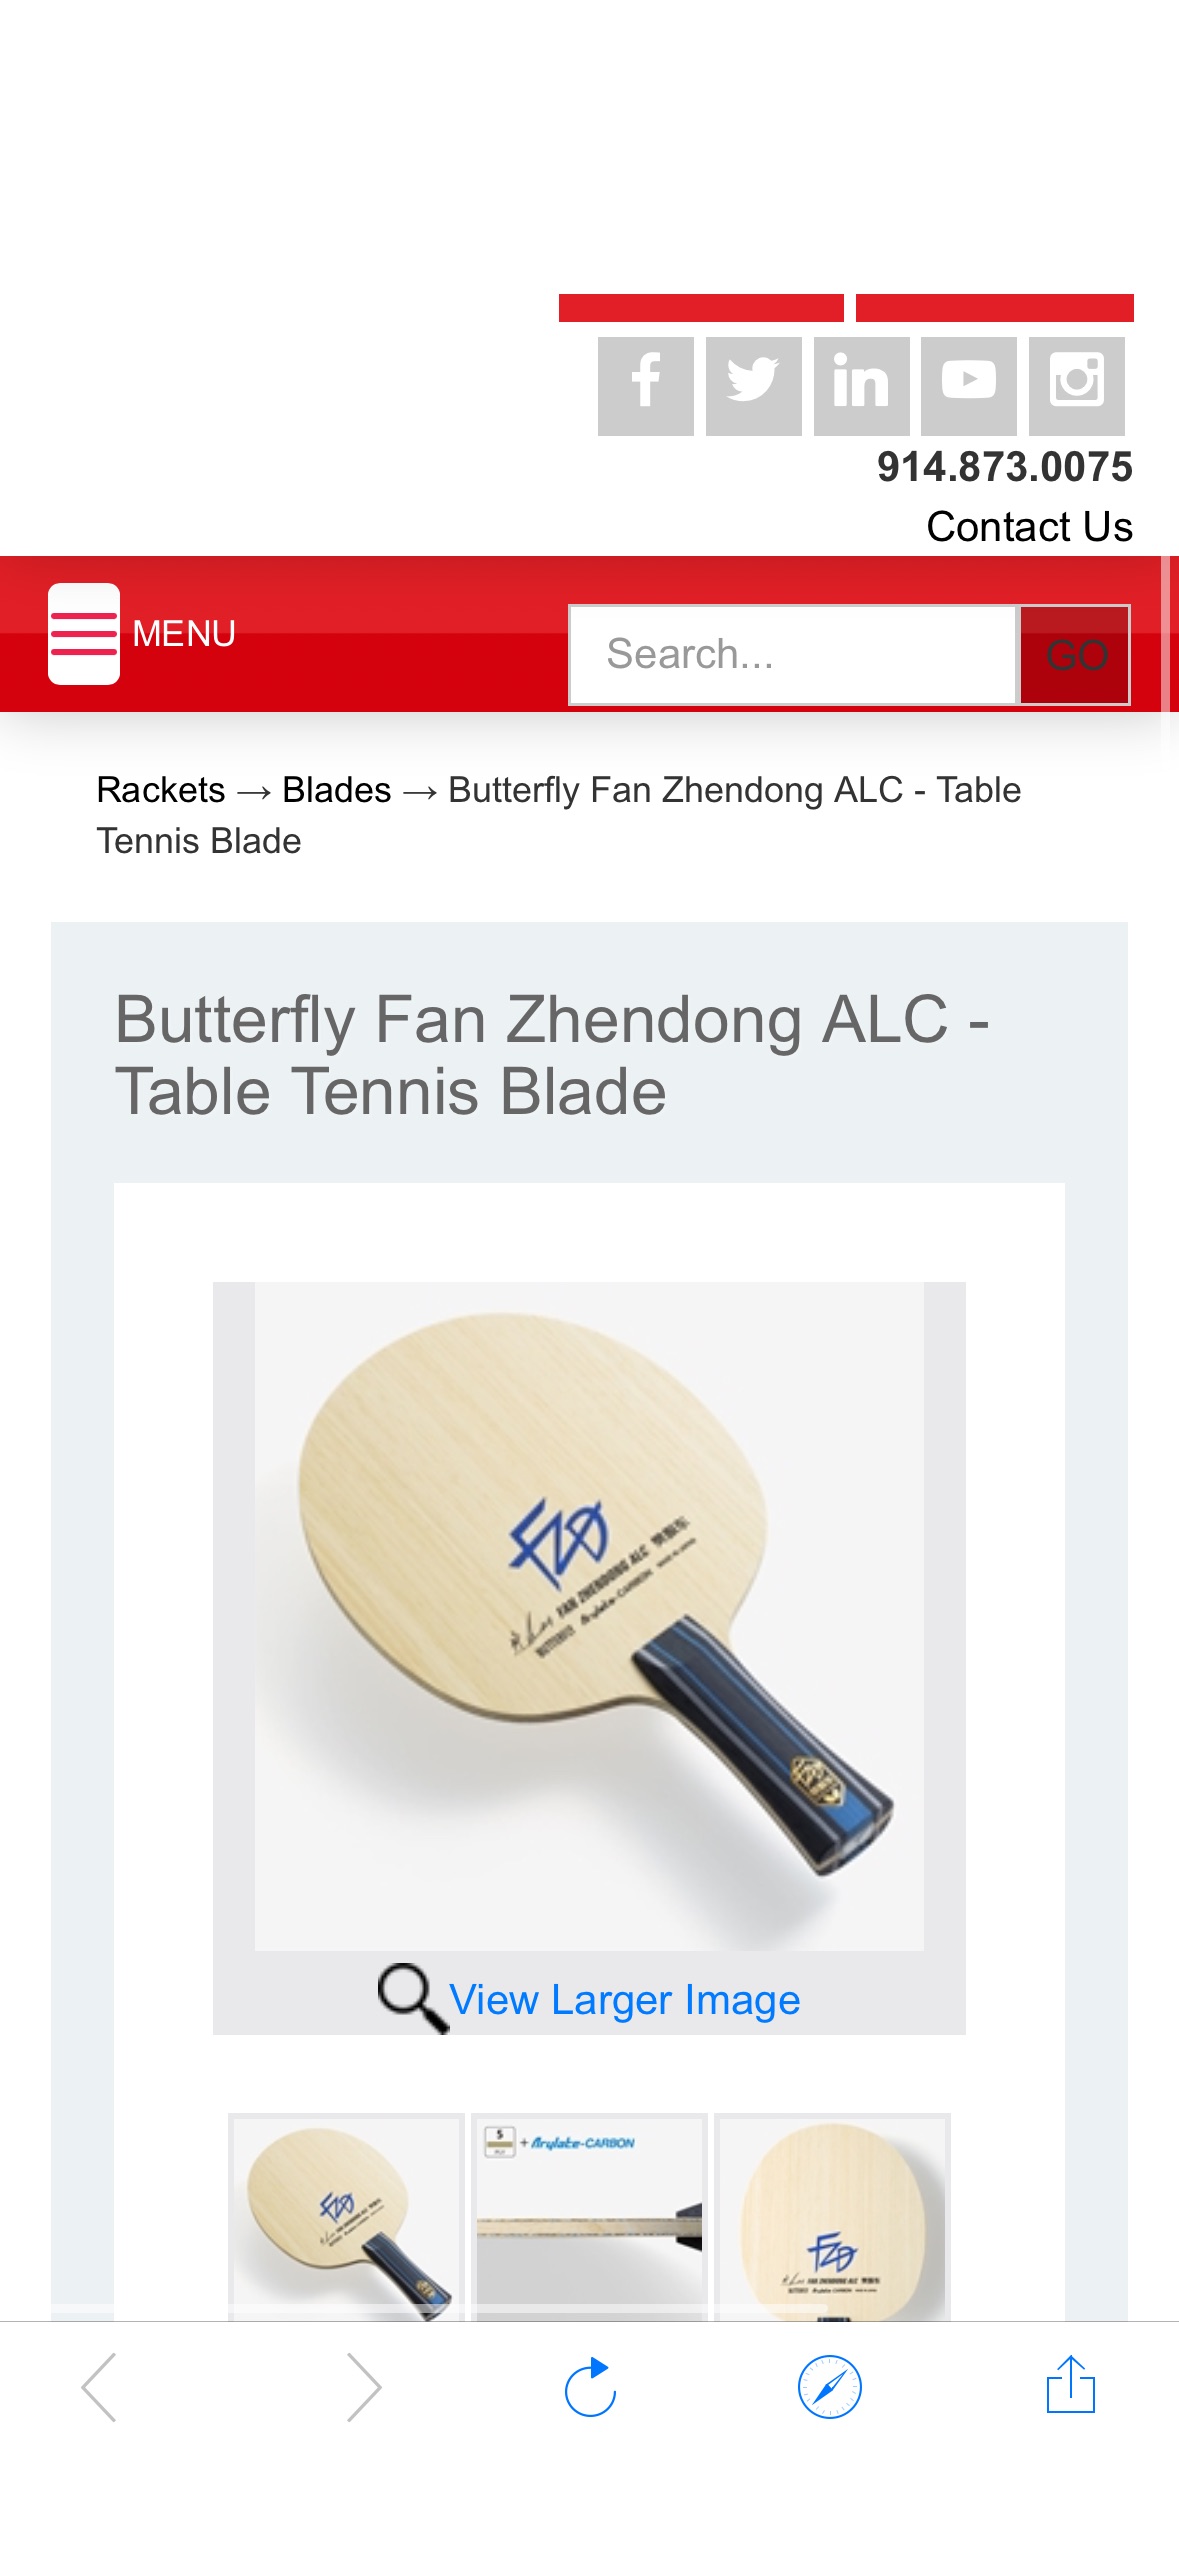 蝴蝶樊振东ALC 乒乓球拍 Butterfly Fan Zhendong ALC - Table Tennis Blade